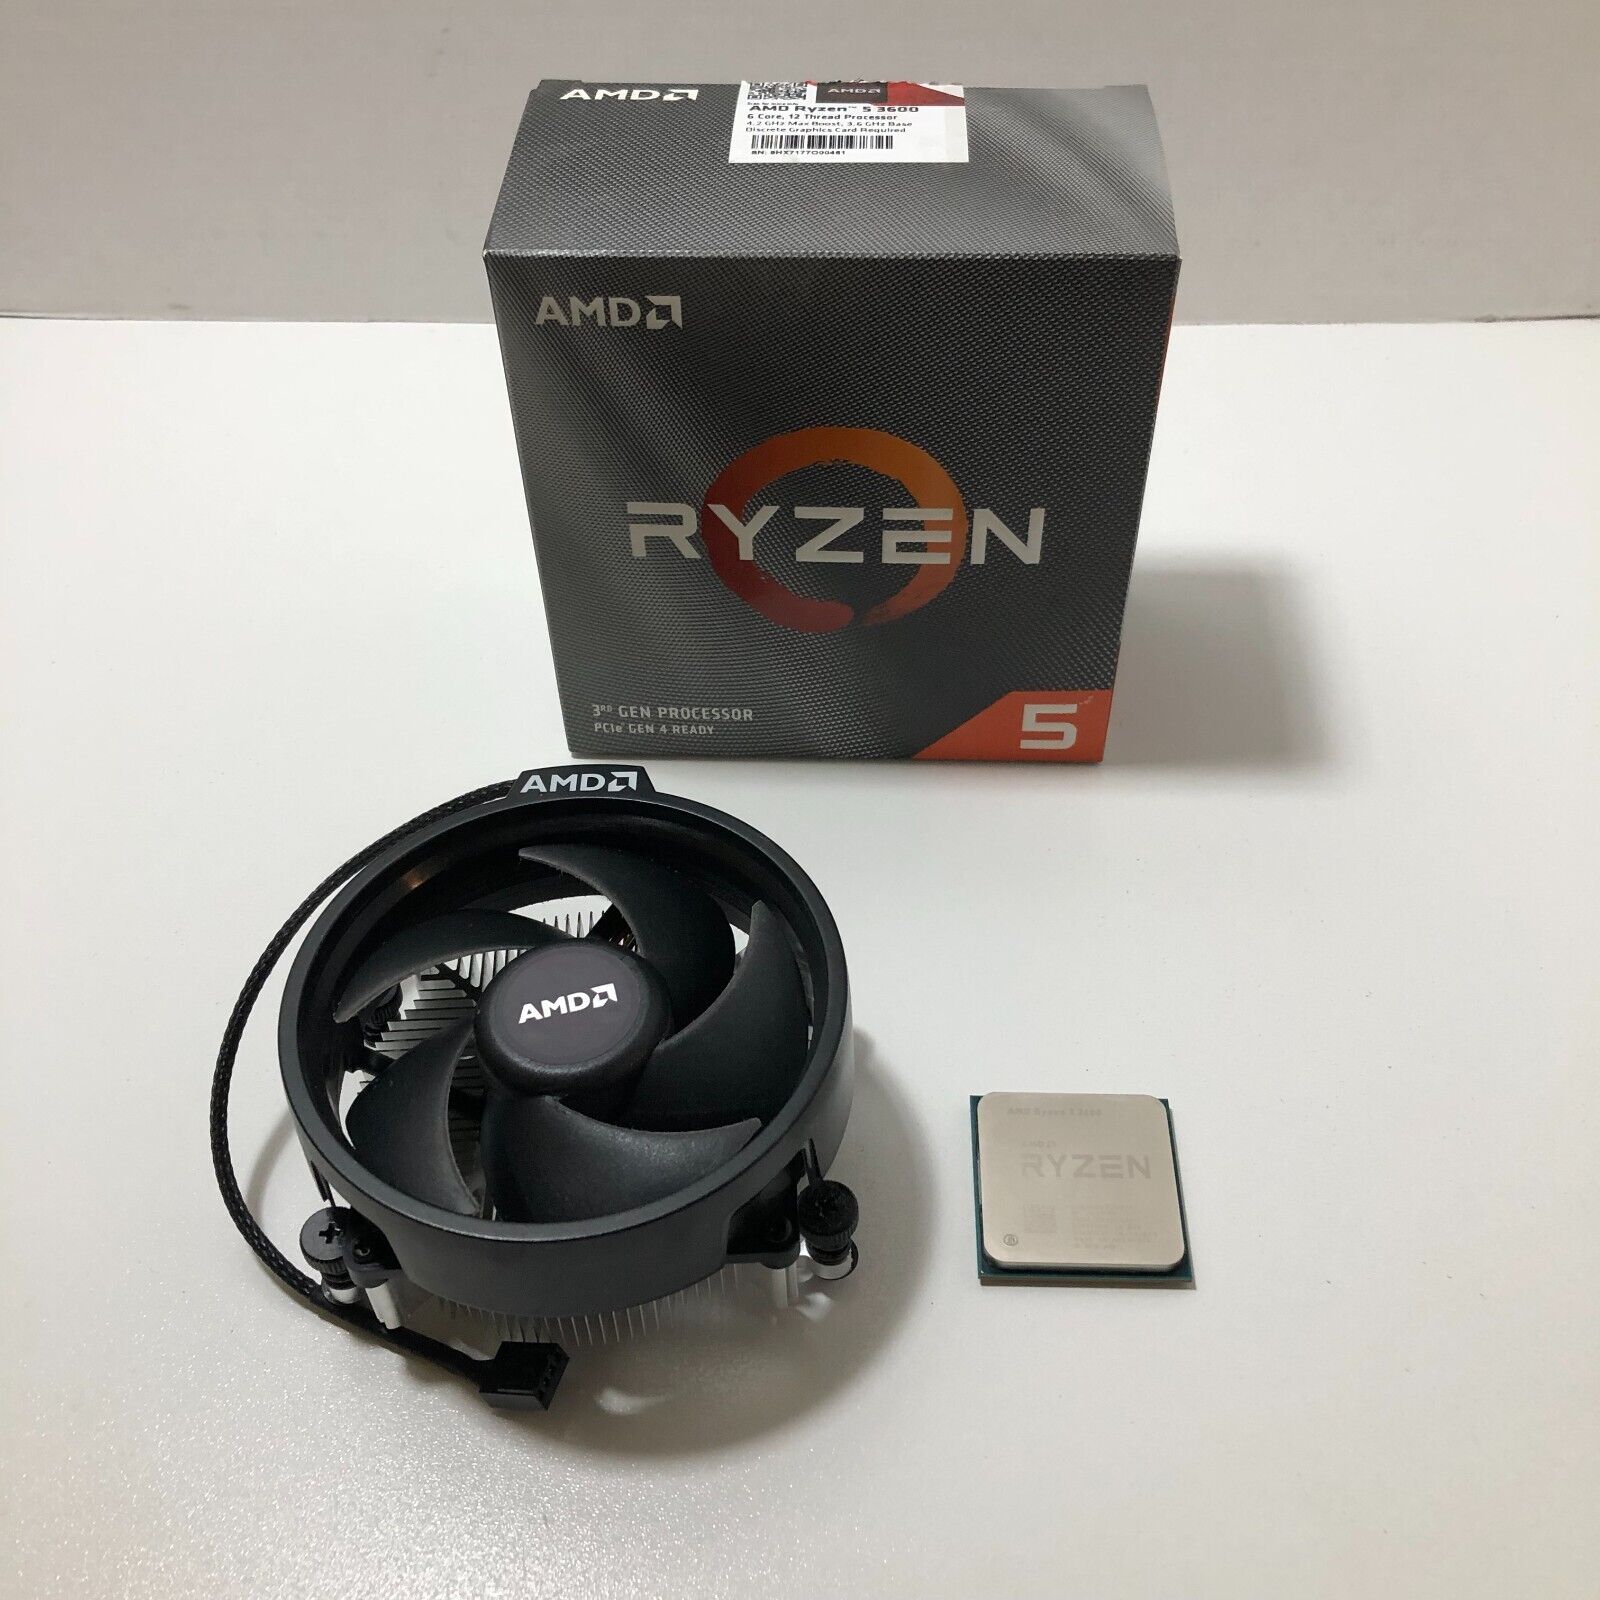 AMD Ryzen 5 3600 6-Core 12-Thread 3.6 GHz Processor with Stock Cooler